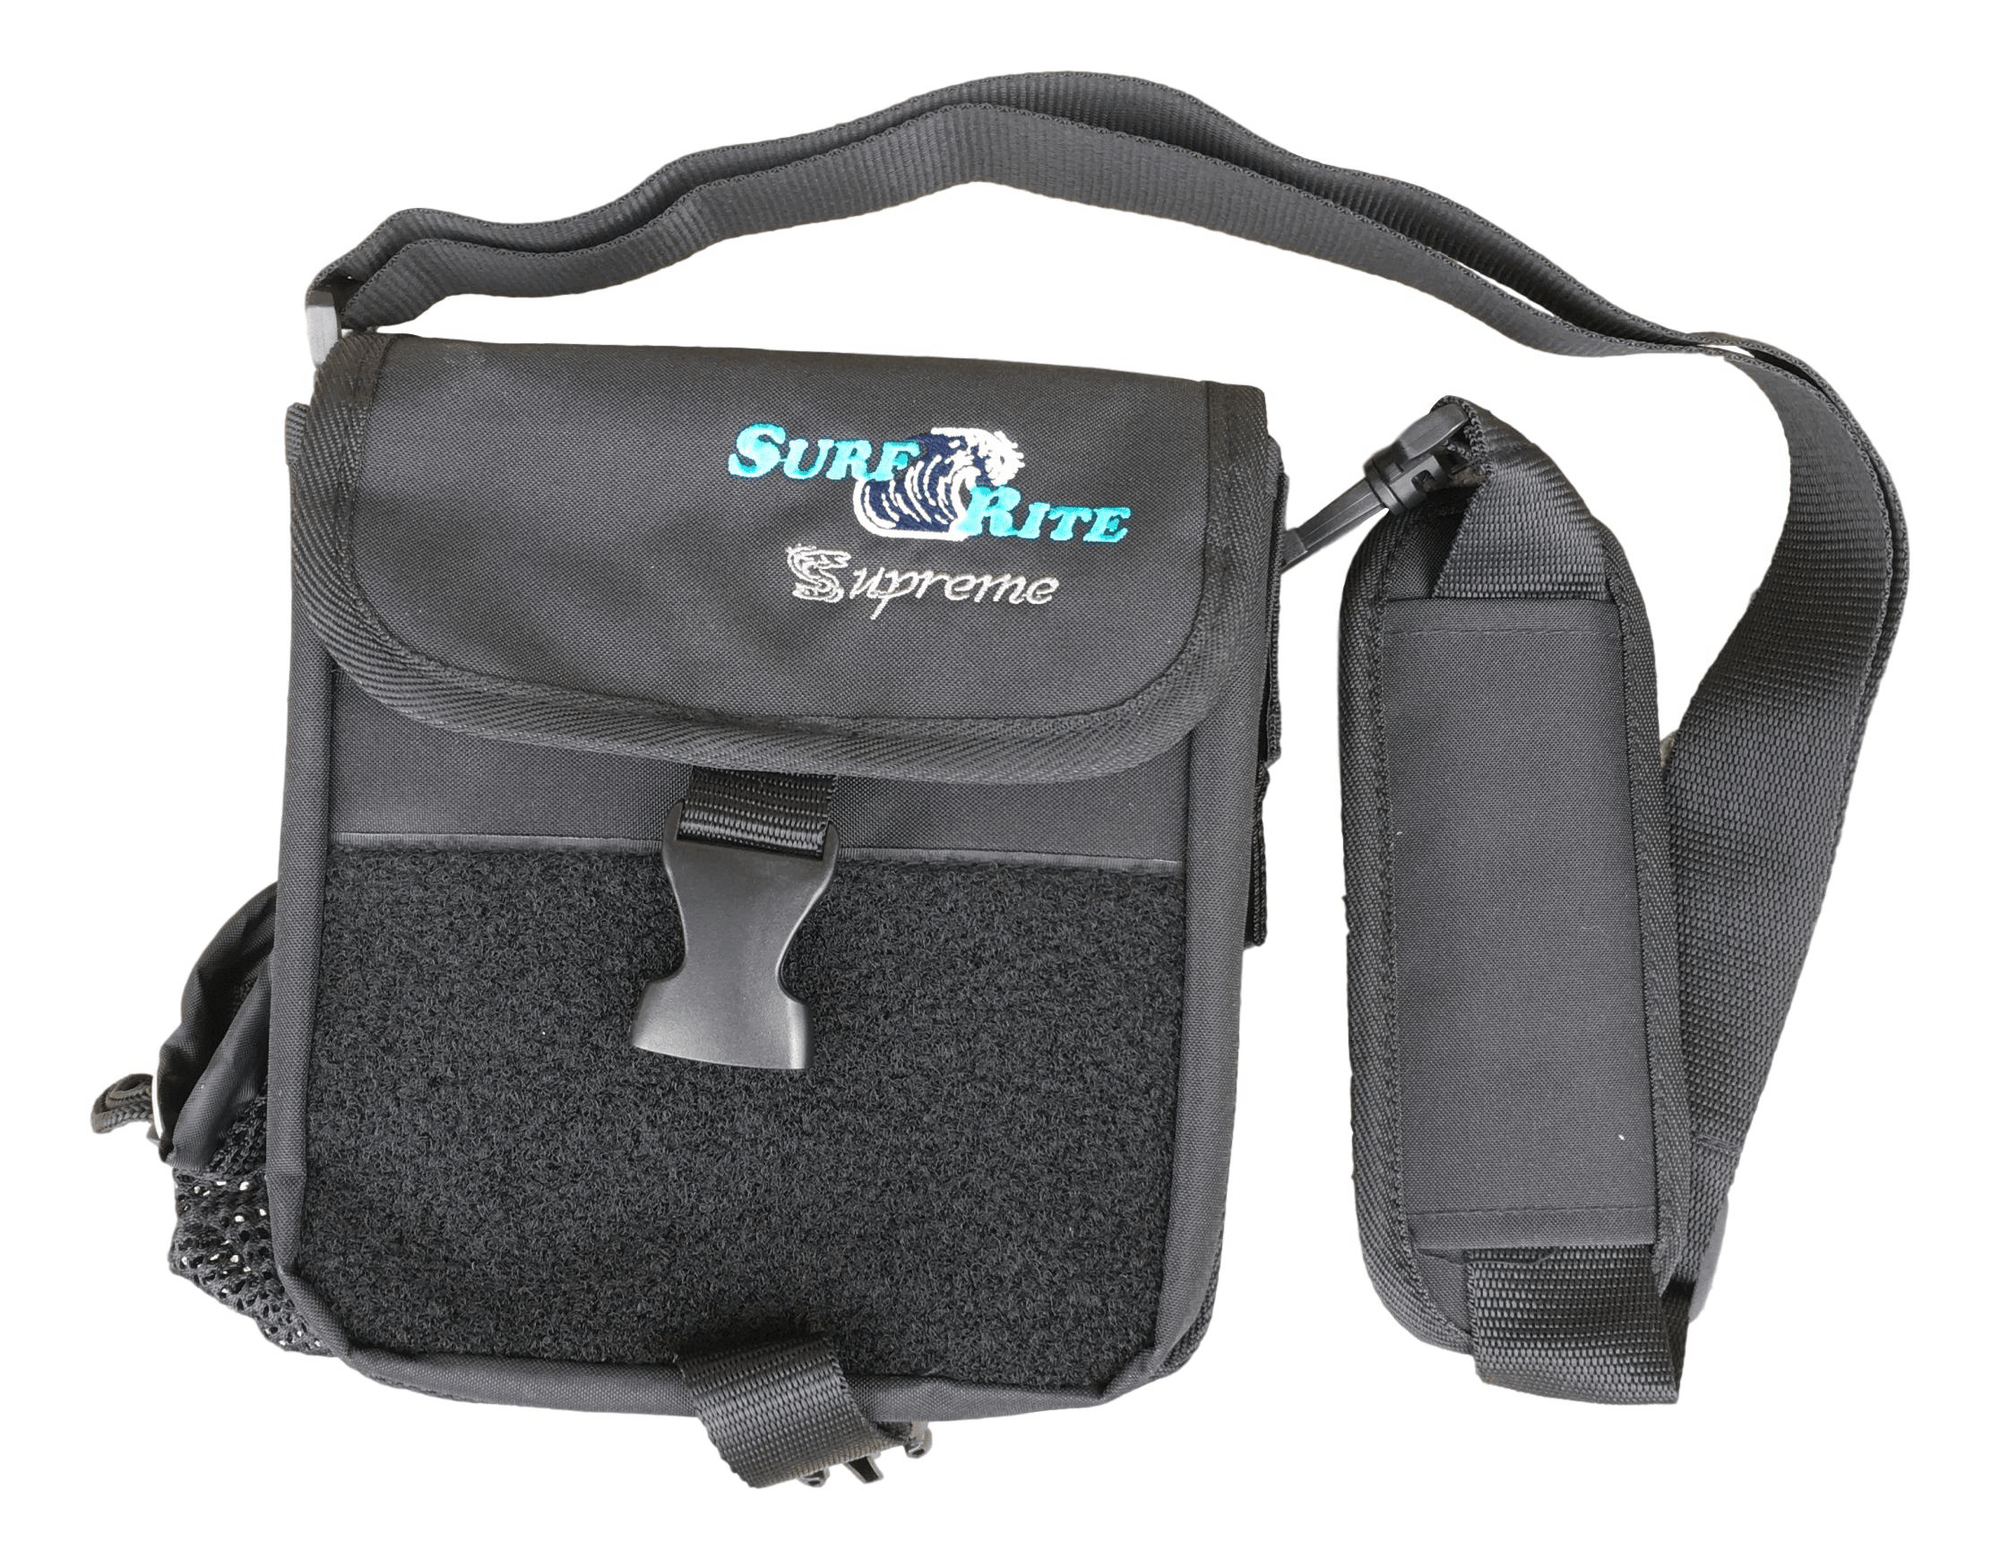  AquaSkinz Small Lure Bag : Fishing Tackle Storage